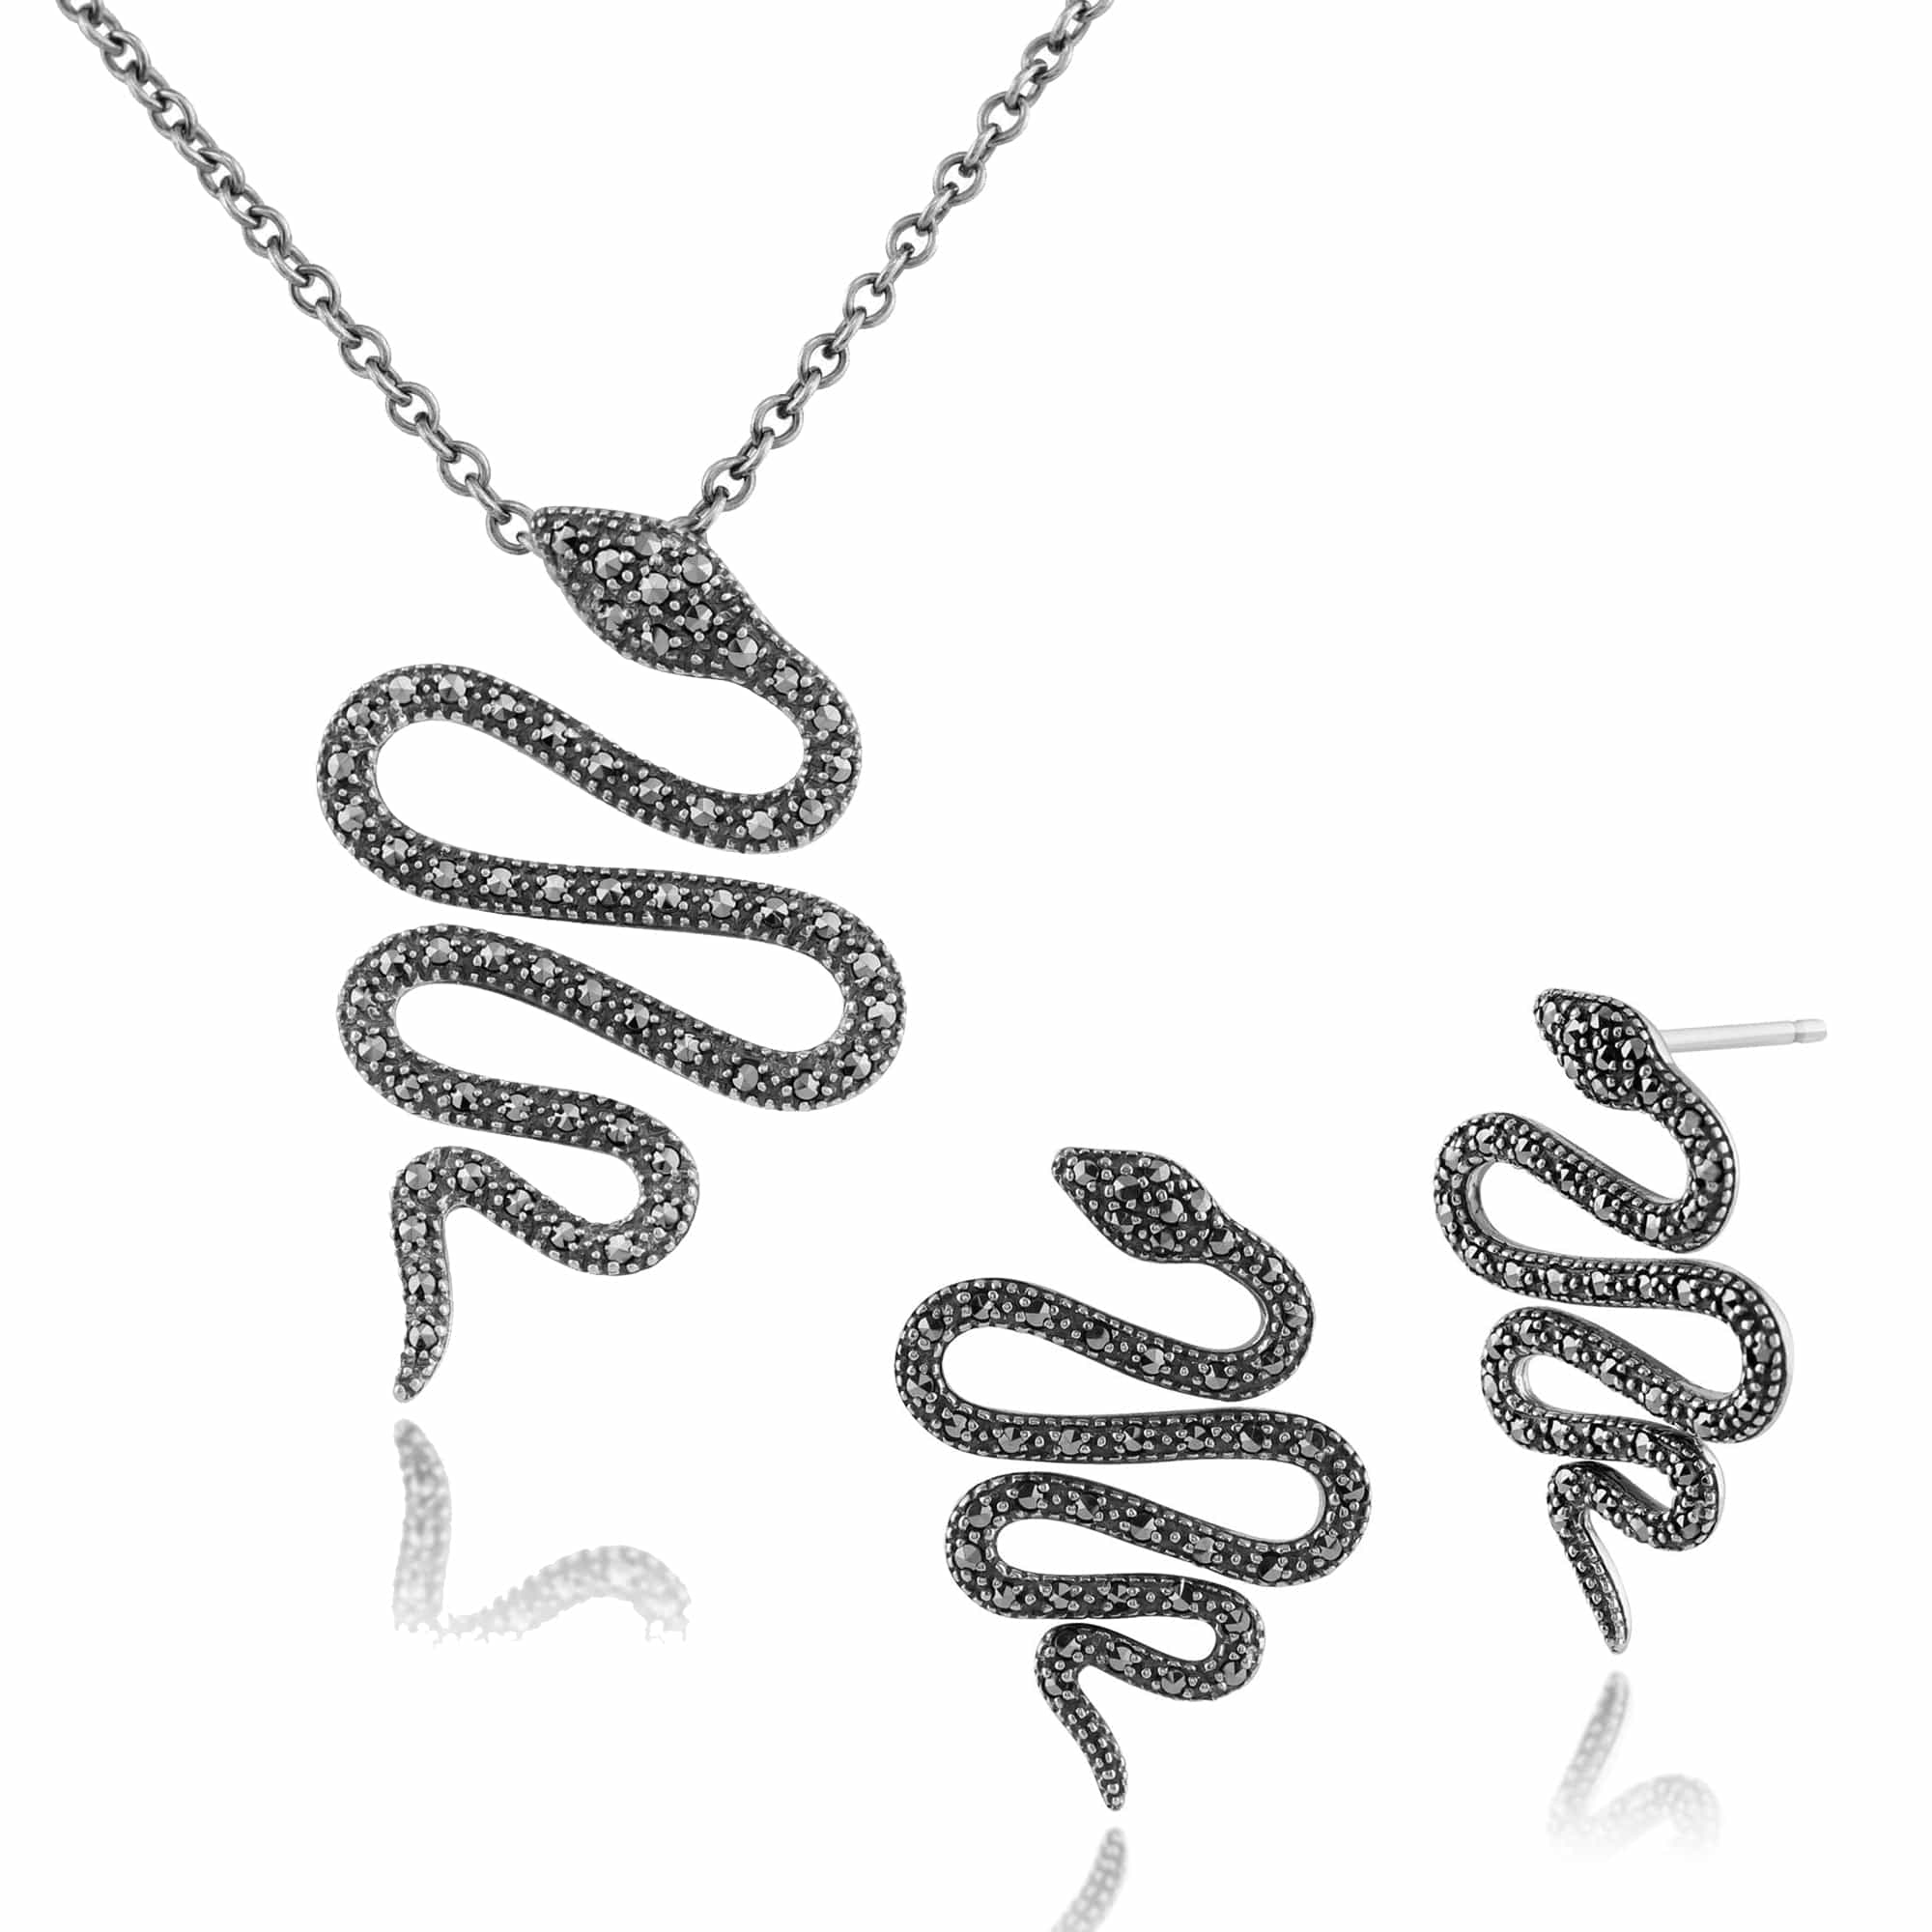 214E816701925-214N672601925 Art Nouveau Style Style Round Marcasite Snake Drop Earrings & Pendant Set in 925 Sterling Silver 1